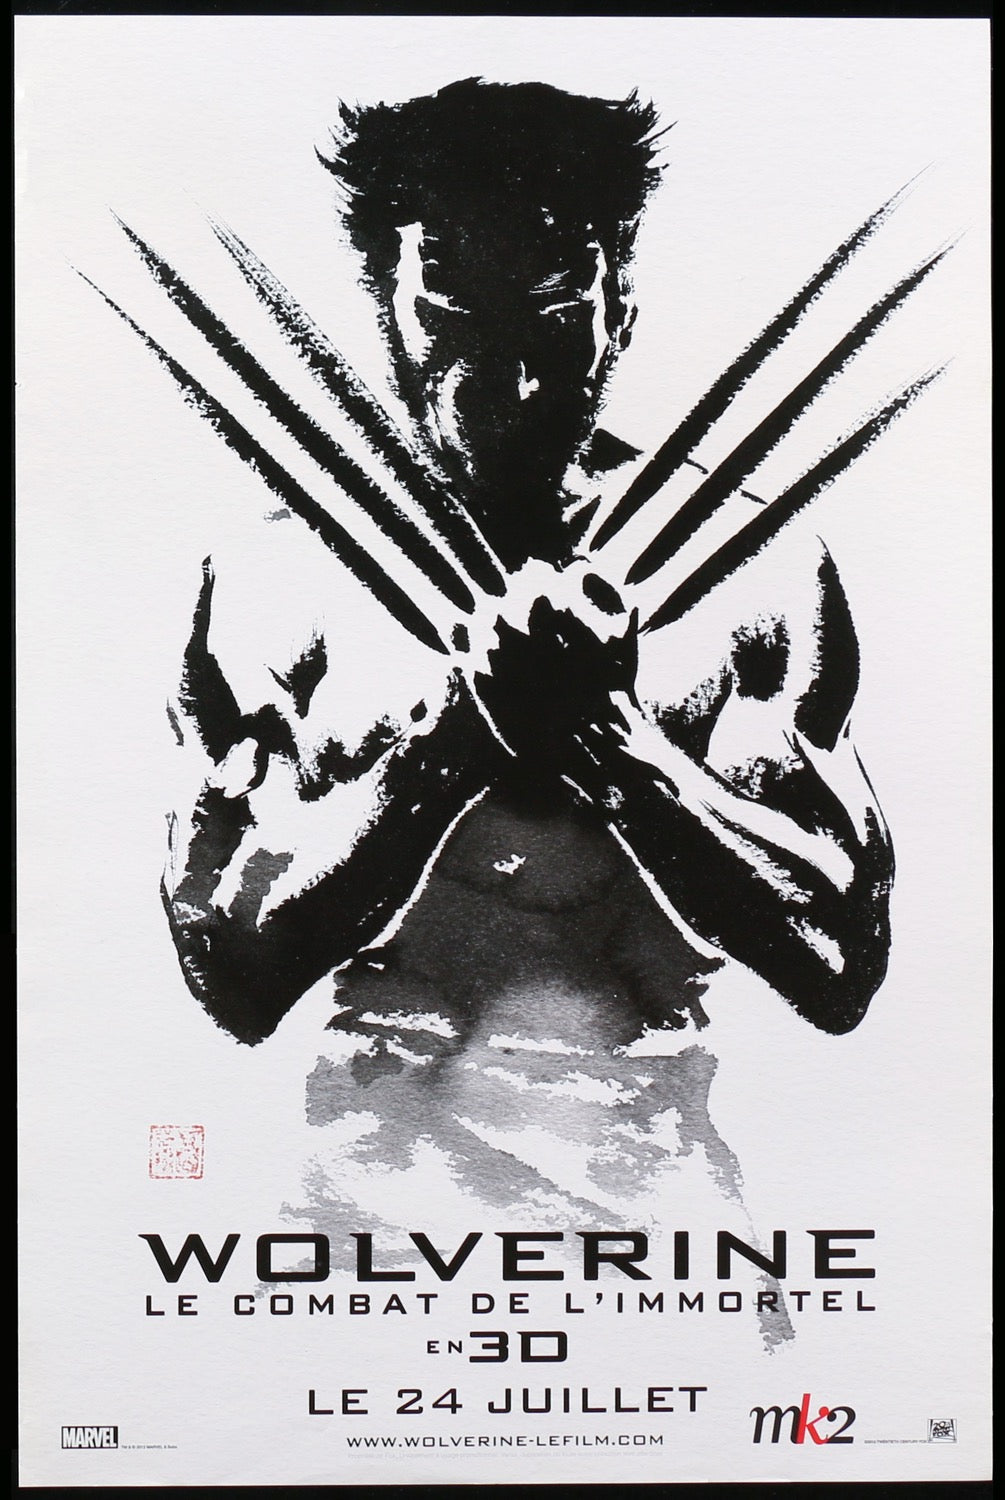 Wolverine (2013) original movie poster for sale at Original Film Art